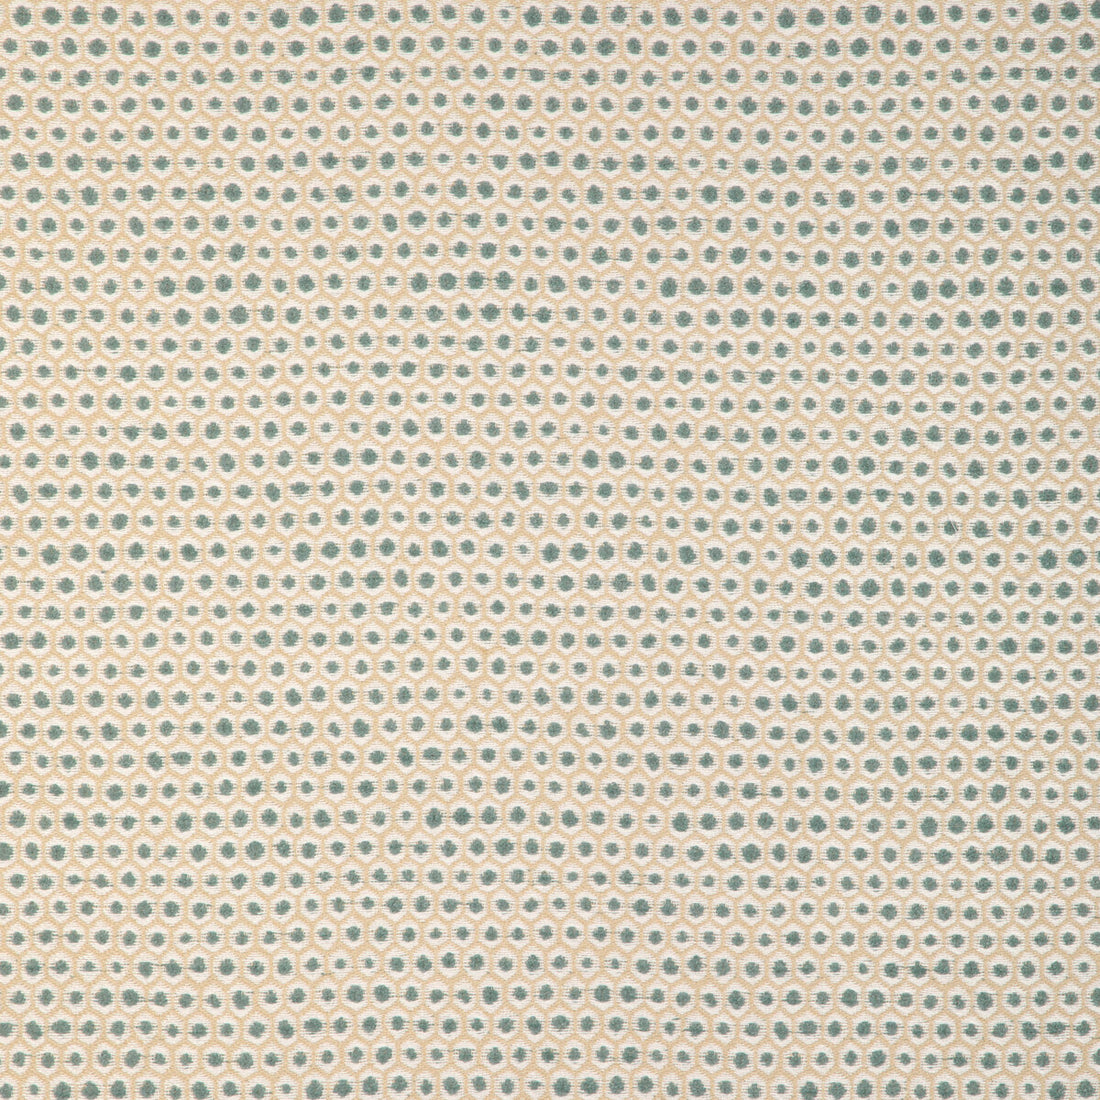 Kravet Smart fabric in 37004-135 color - pattern 37004.135.0 - by Kravet Smart in the Pavilion collection